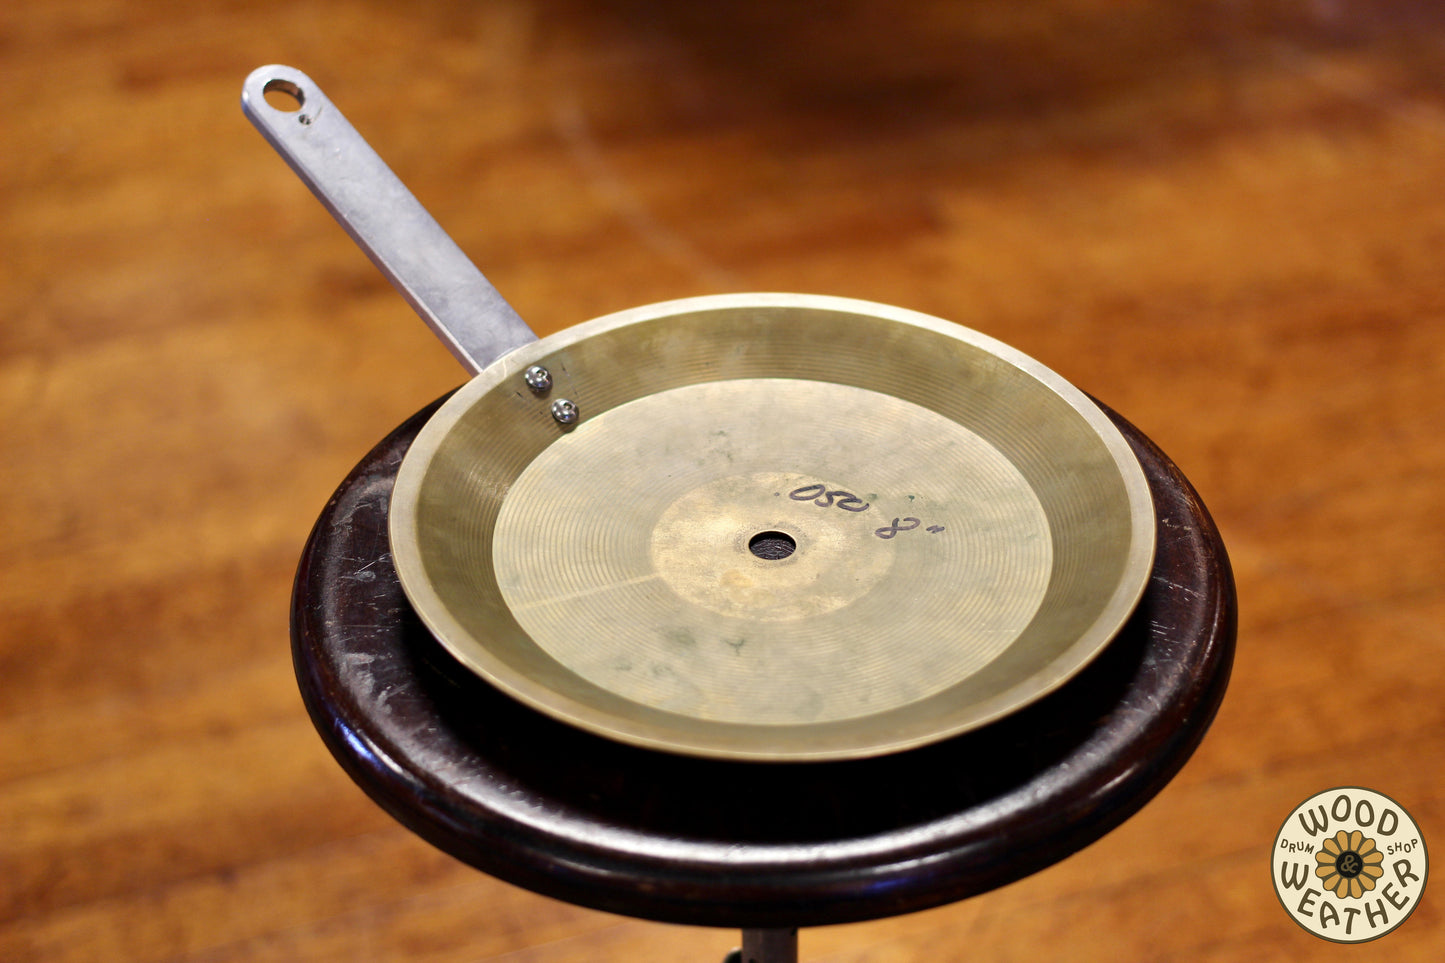 Zildjian Sound Lab Prototype 8" Frying Pan Cymbal 435g - USED